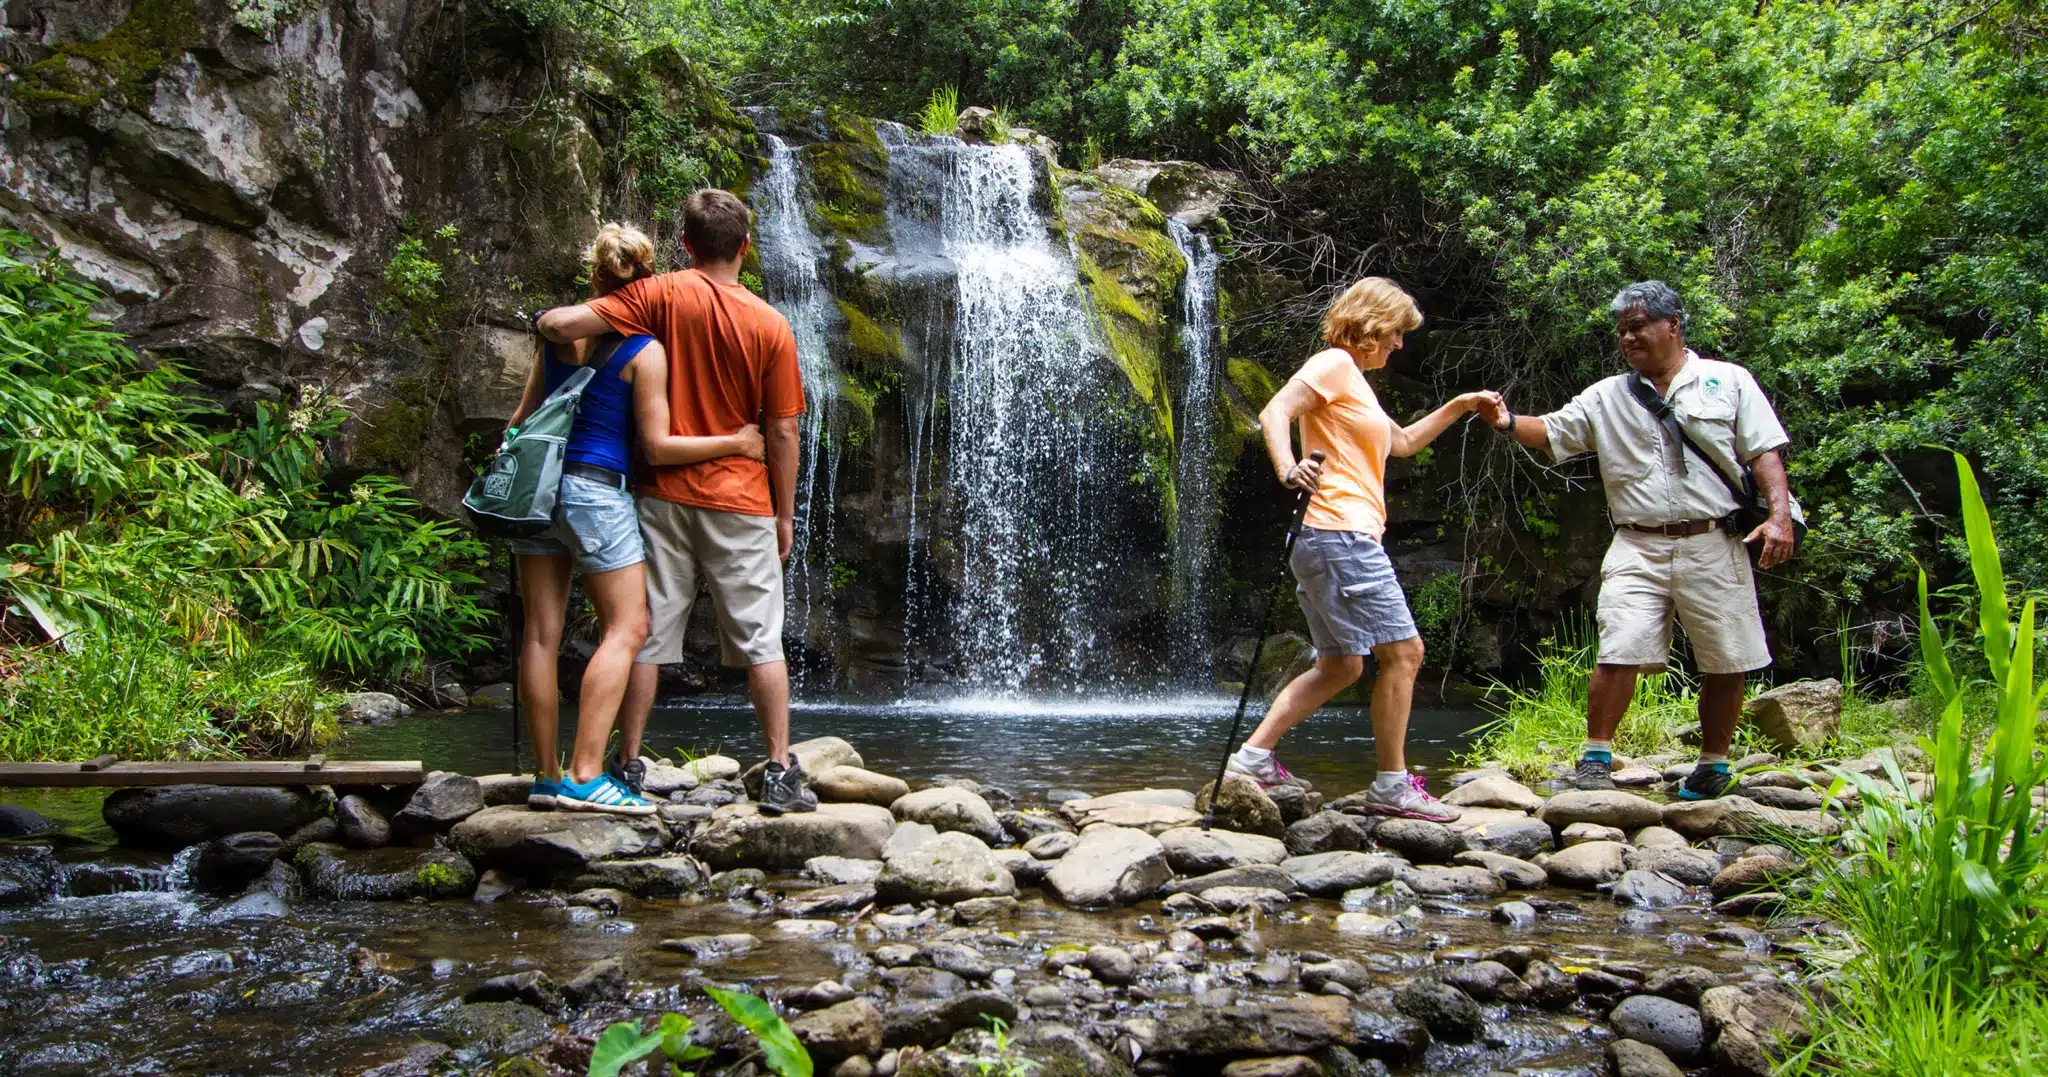 Kohala Waterfalls Adventure - Private Ohana Outing is a Land Activity located in the city of Kailua-Kona on Big Island, Hawaii